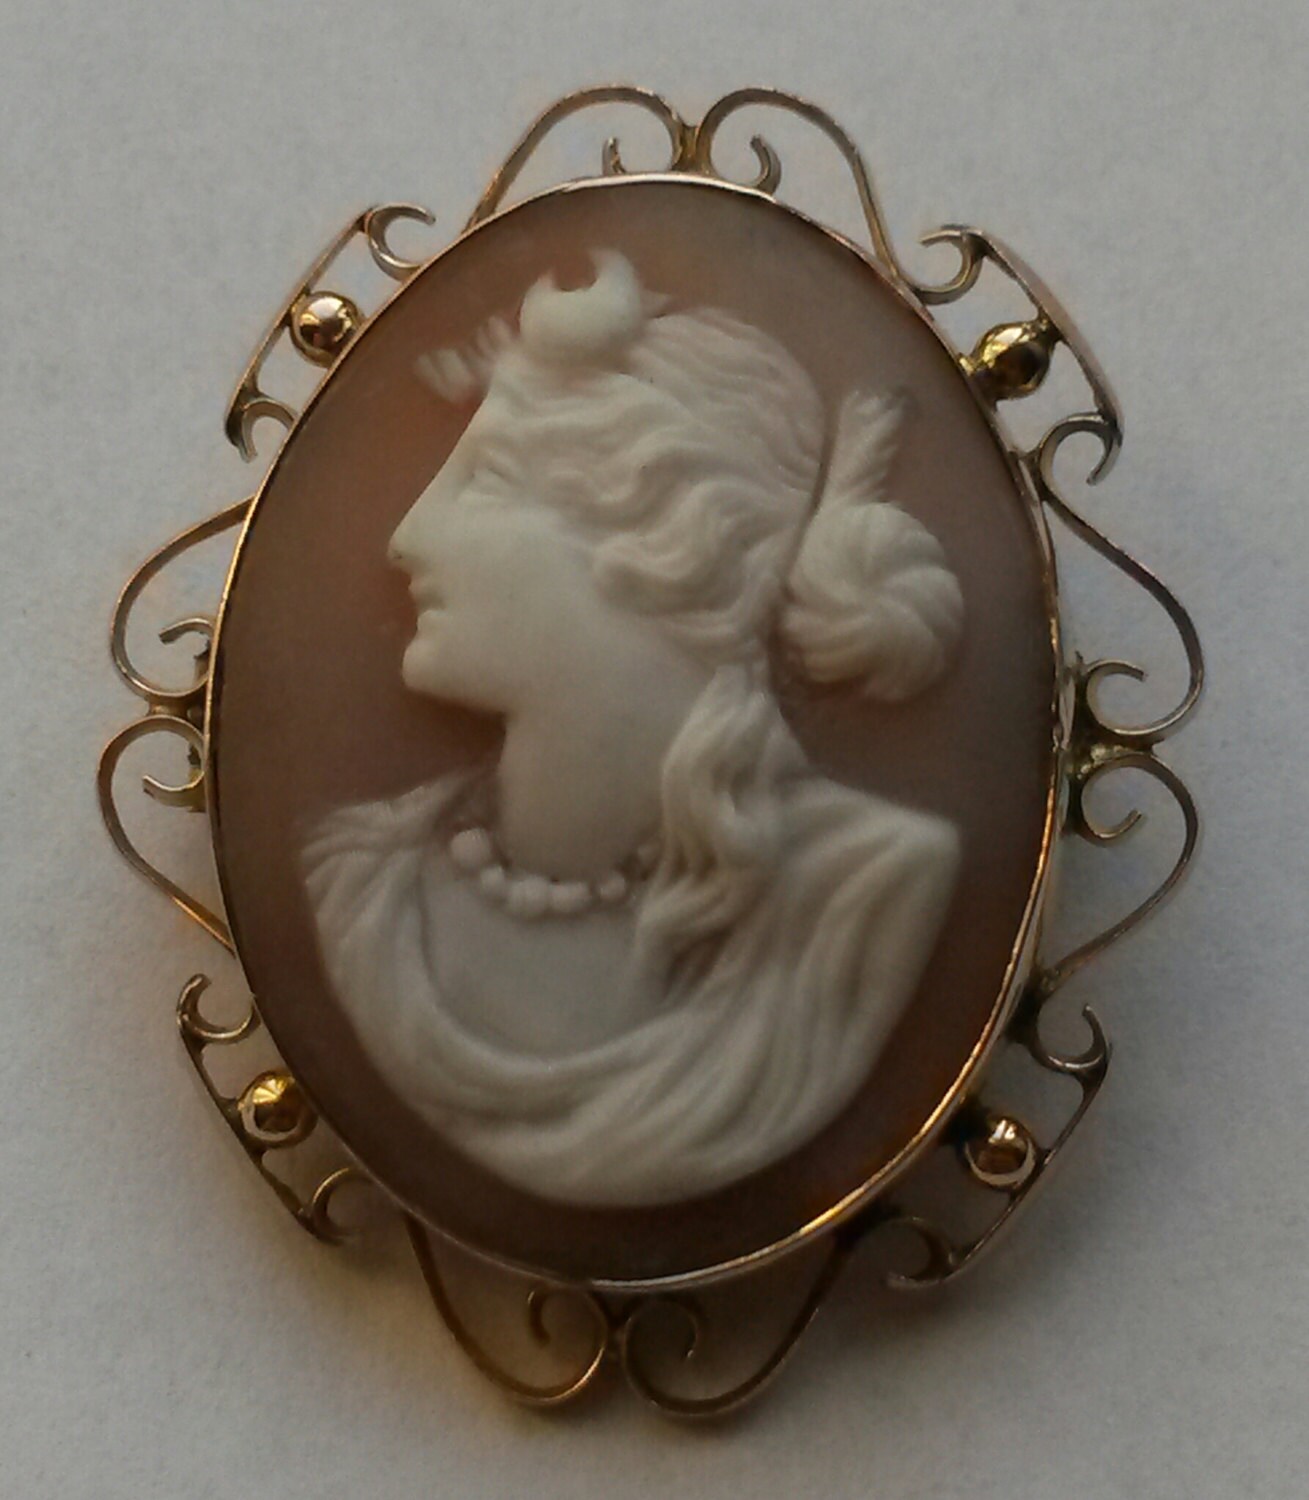 Vintage 9 carat gold ornate cameo brooch